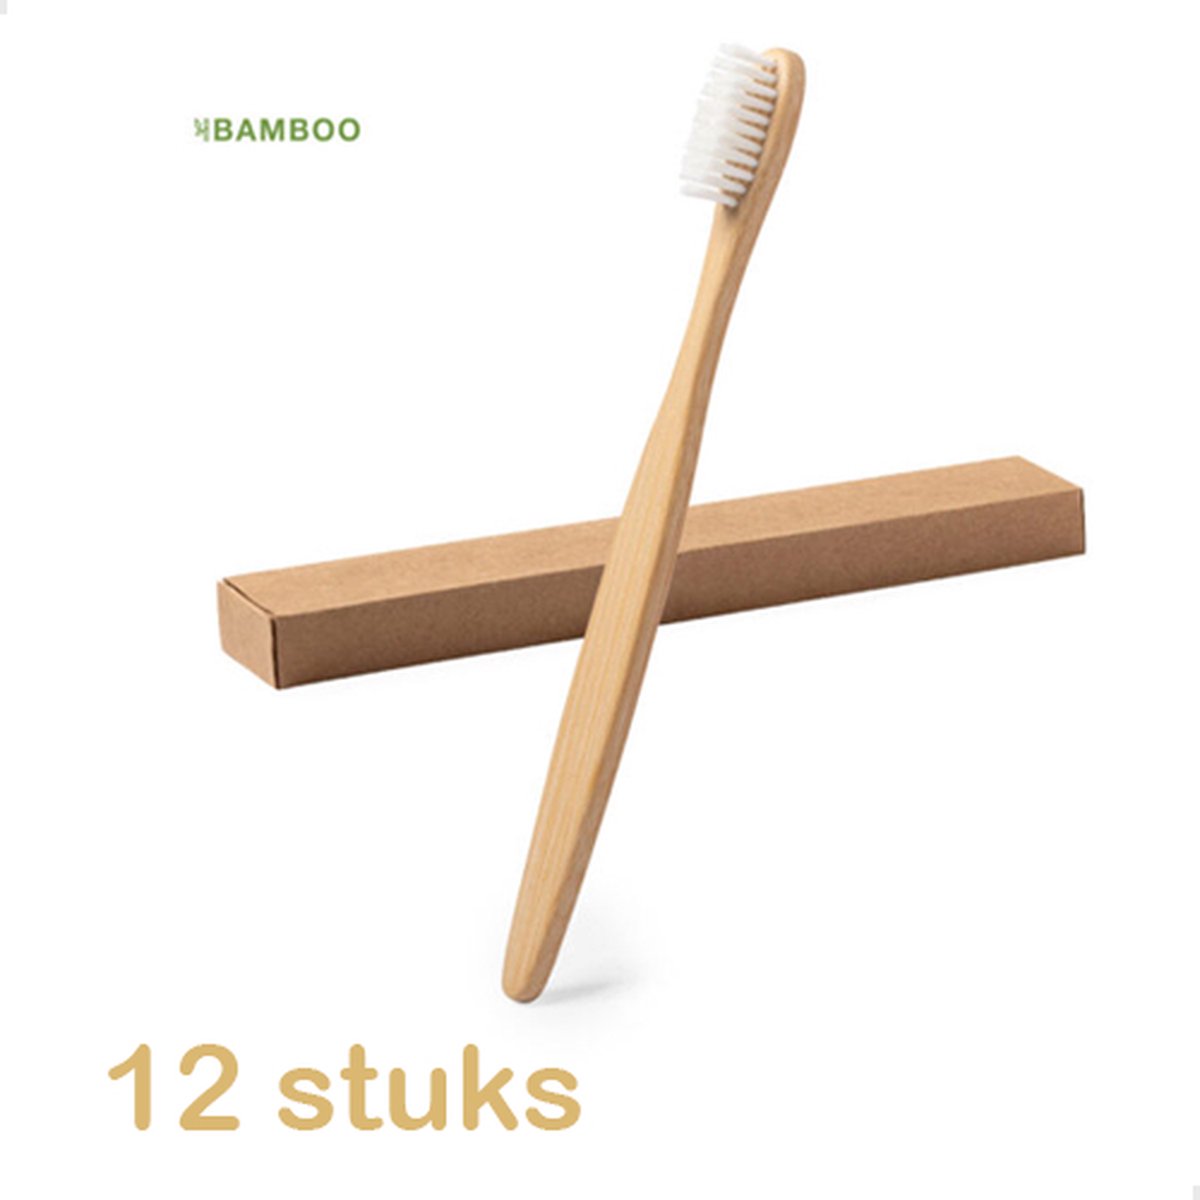 25 Stuks Bamboe Tandenborstels - Promopack - Bamboe - Ideaal om te graveren - Origineel Bedankje - Klein Geschenkje